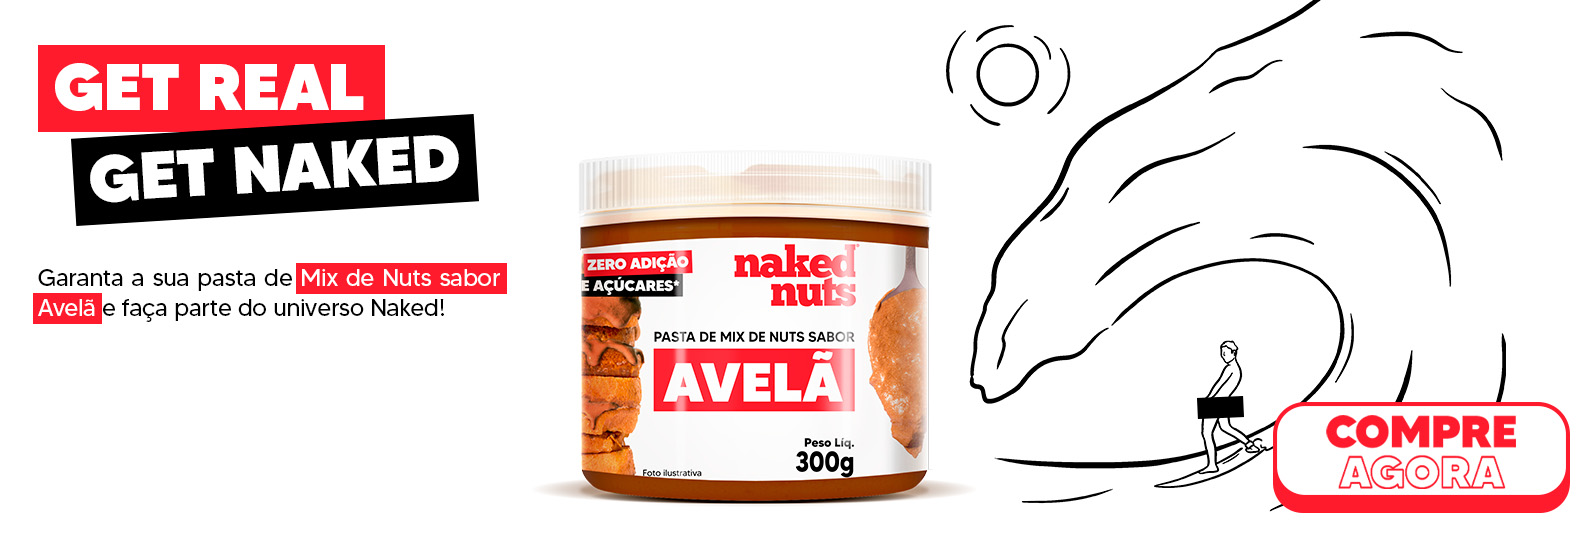 pasta mix de nuts sabor avelã Naked Nuts